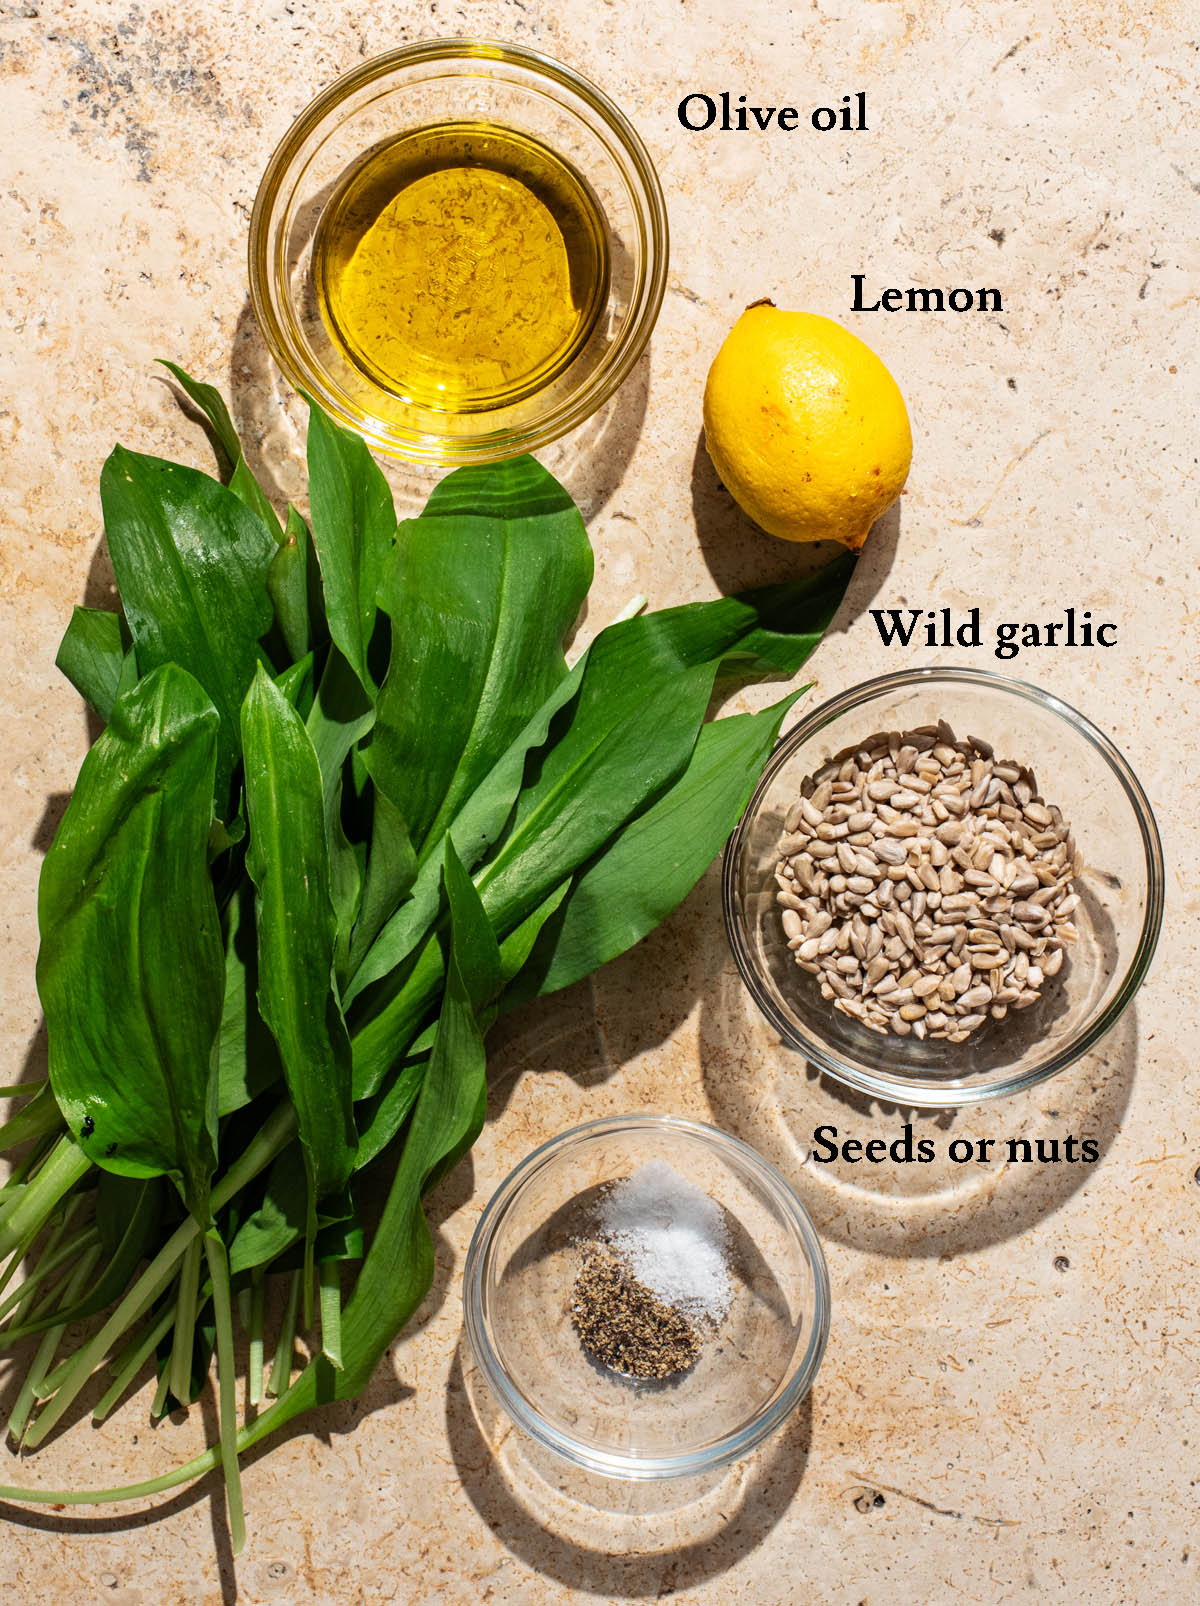 Wild garlic pesto ingredients with labels.